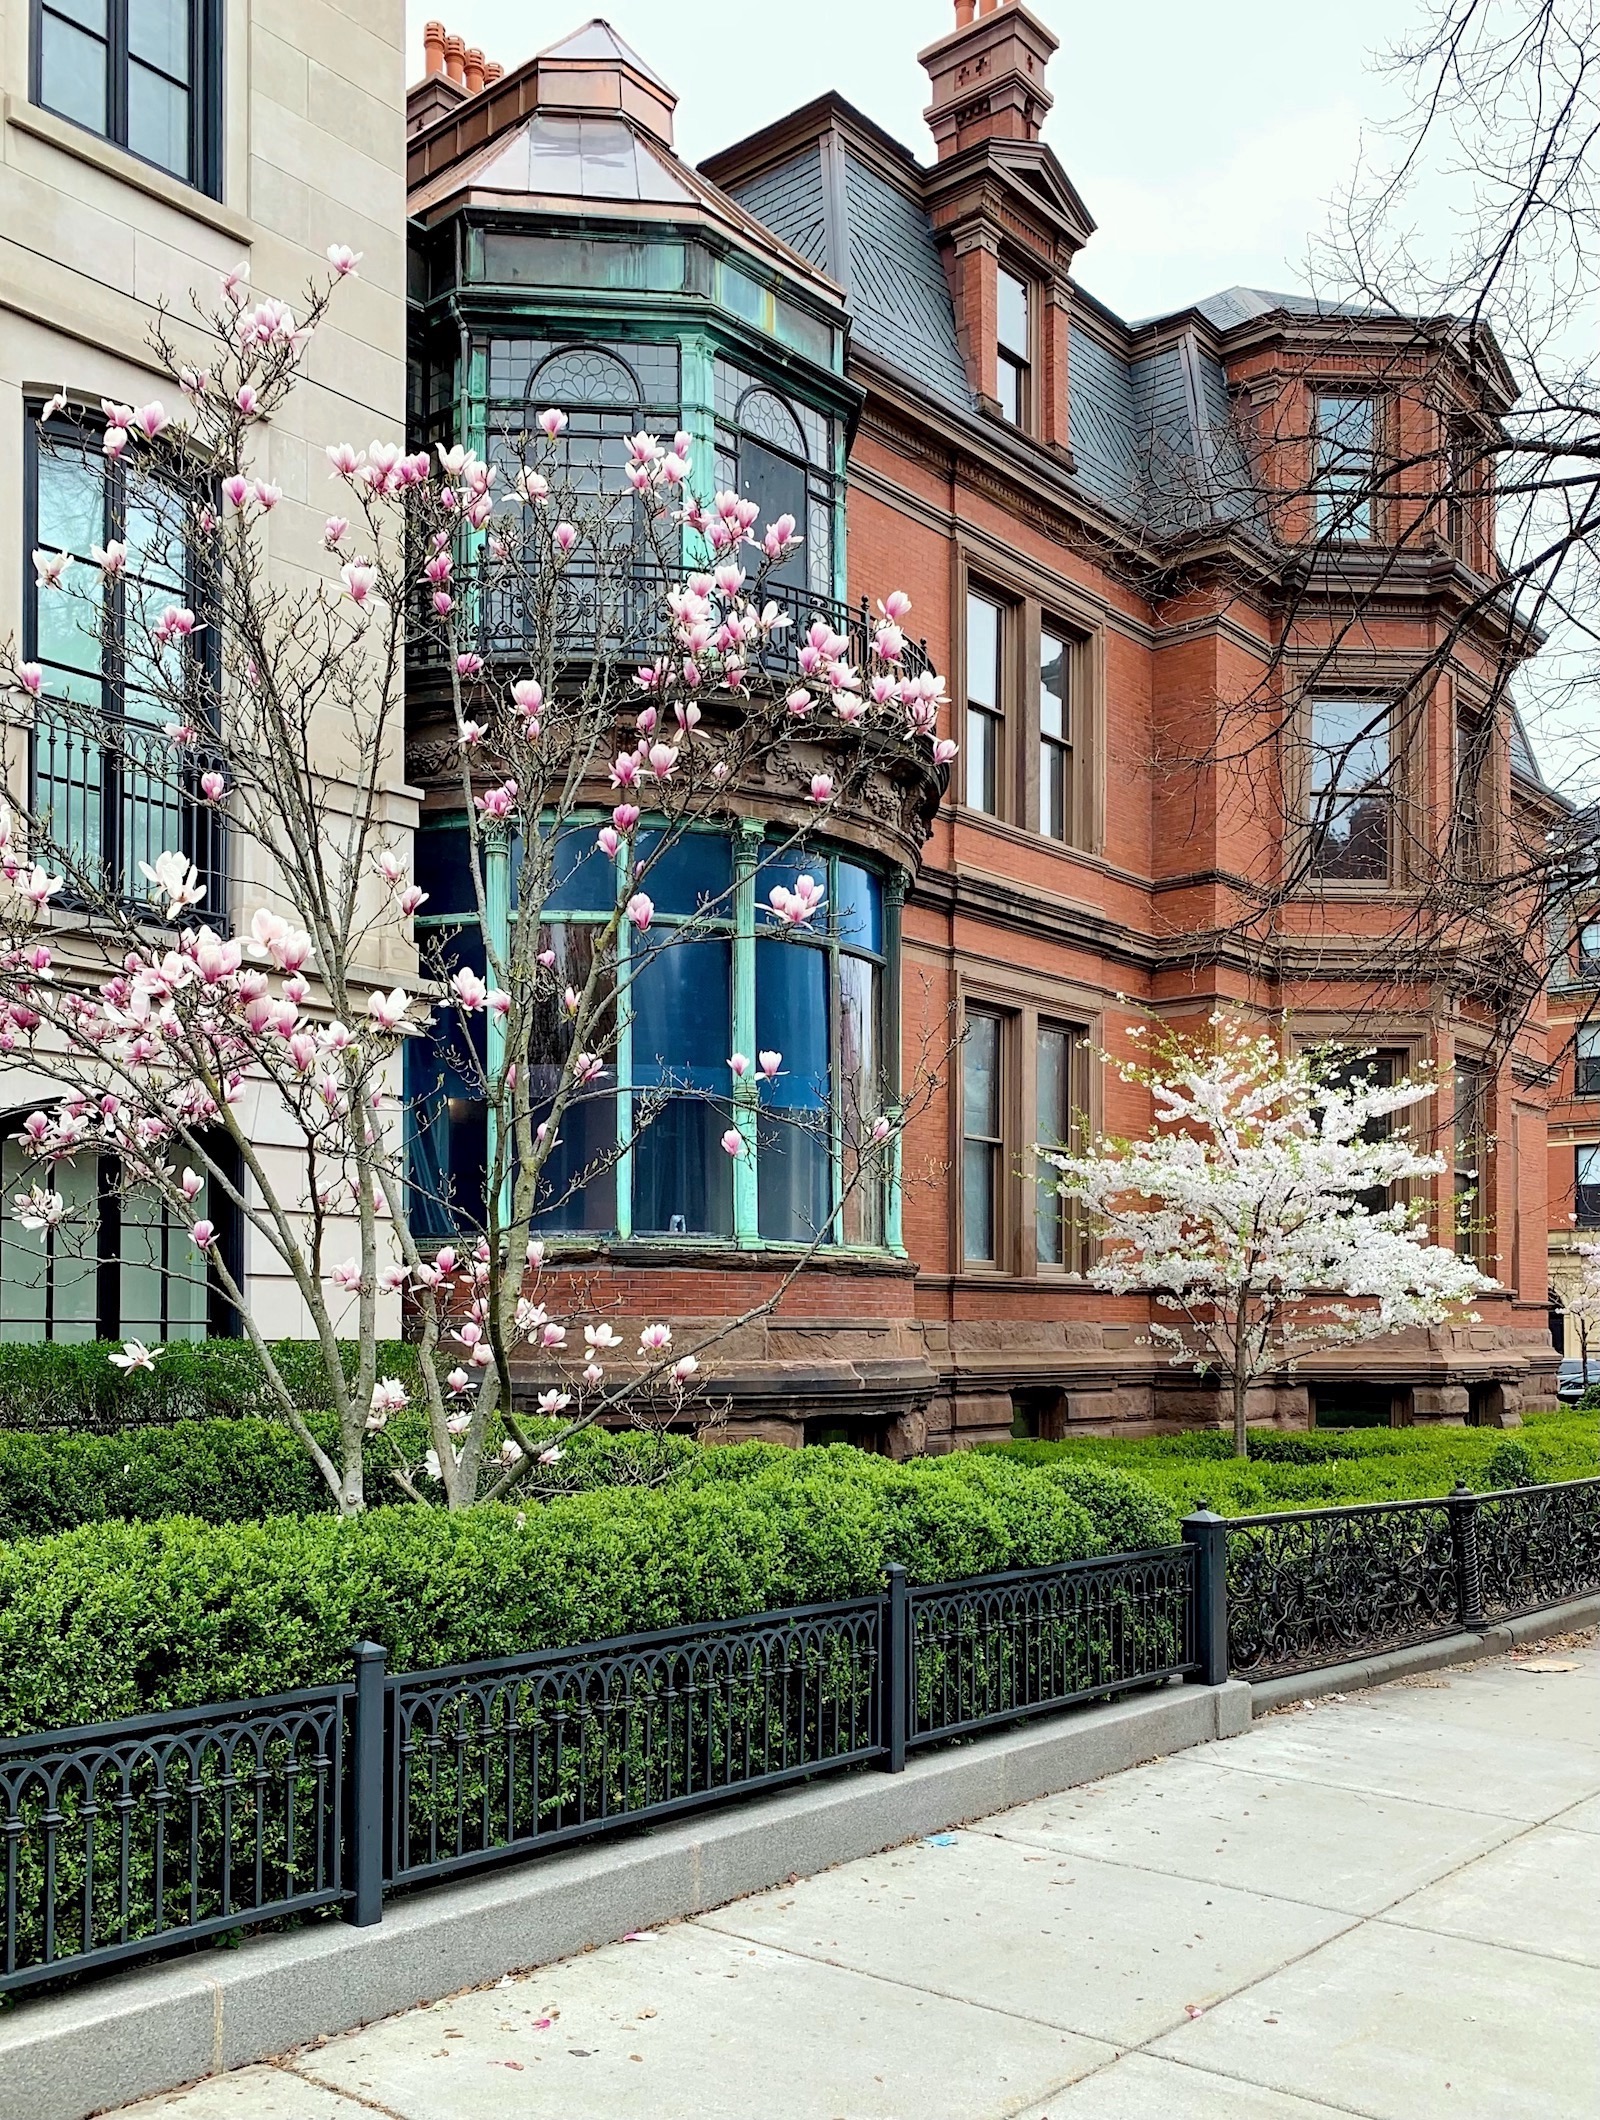 fantastic house - Springtime in Boston - Commonwealth Ave